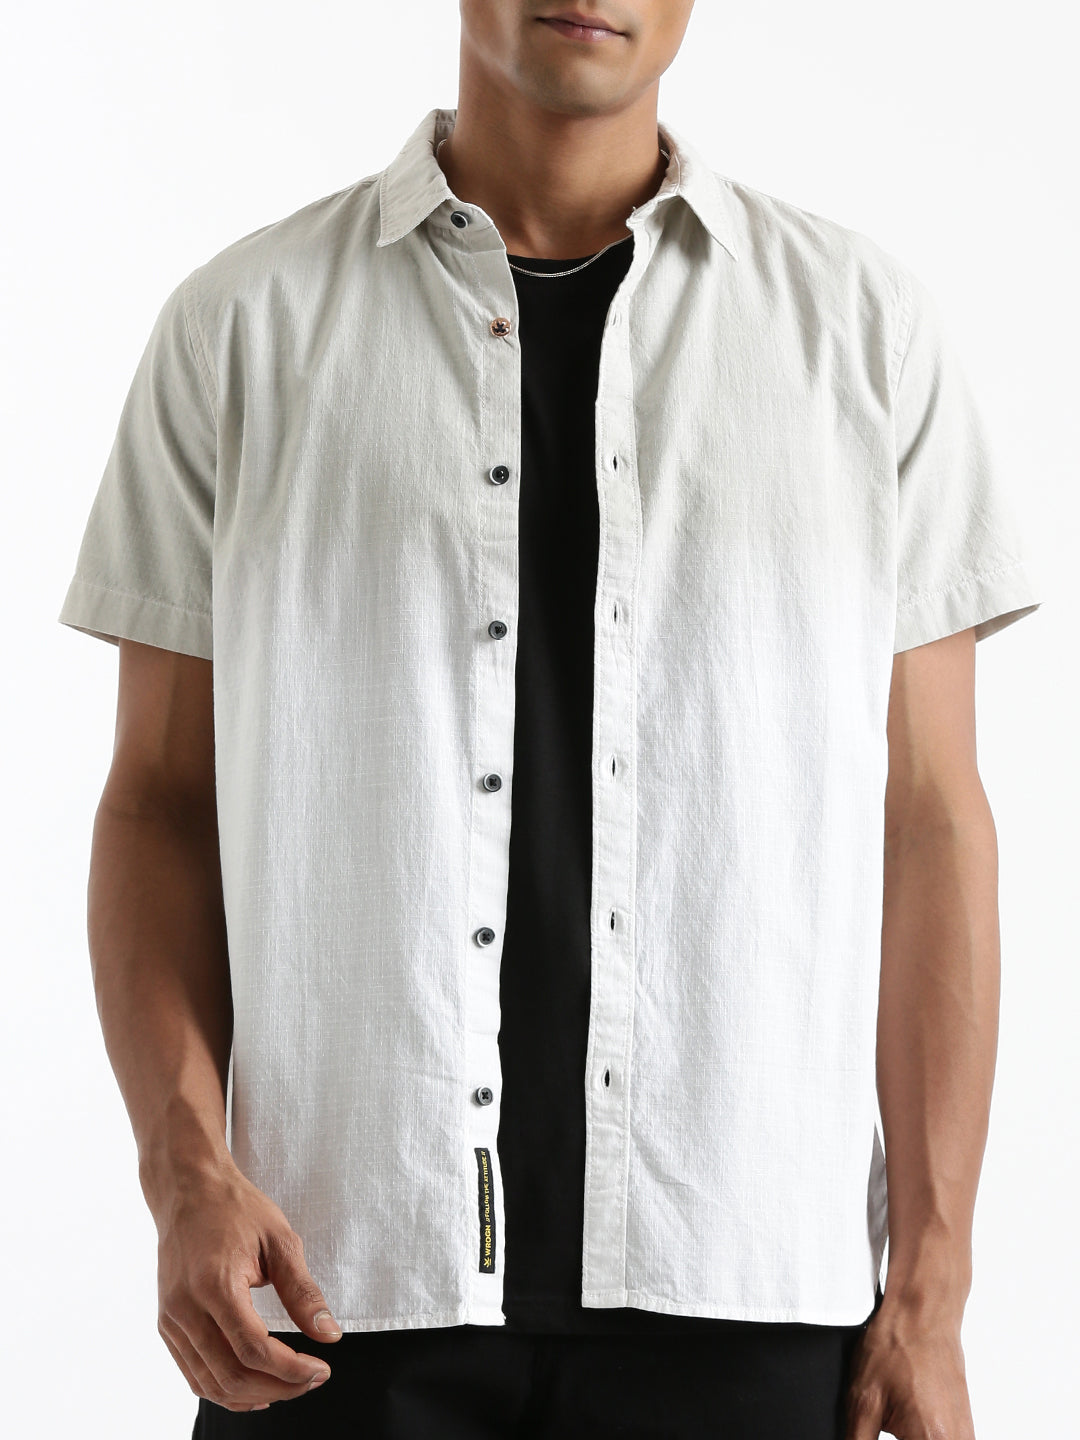 Classic Sleek Half Sleeve Cotton Shirt